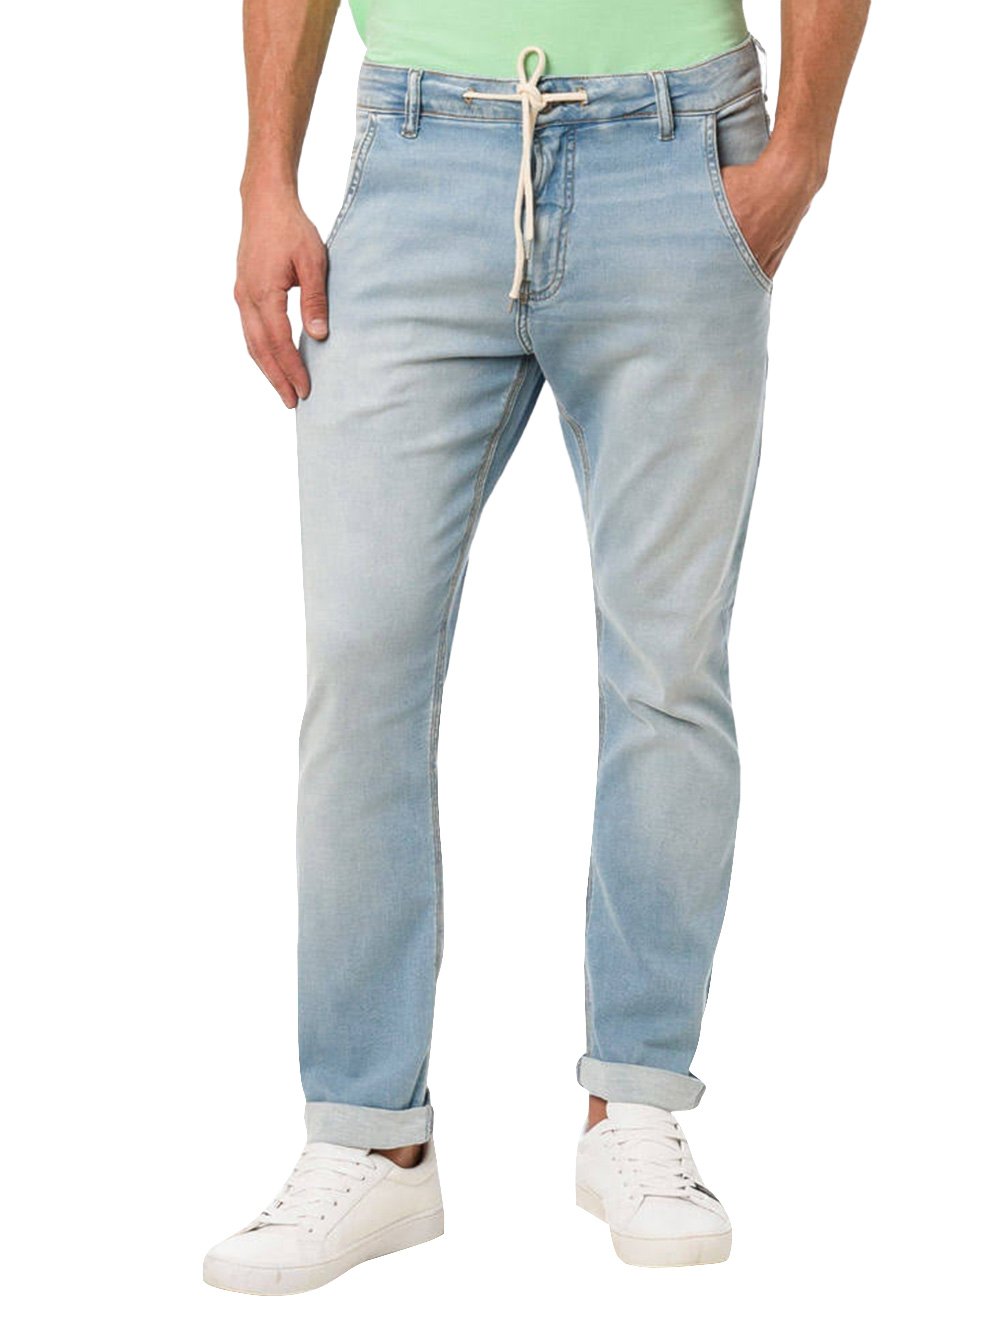 Calça Calvin Klein Jeans Masculina Stretch Cadarço Cós Off-White